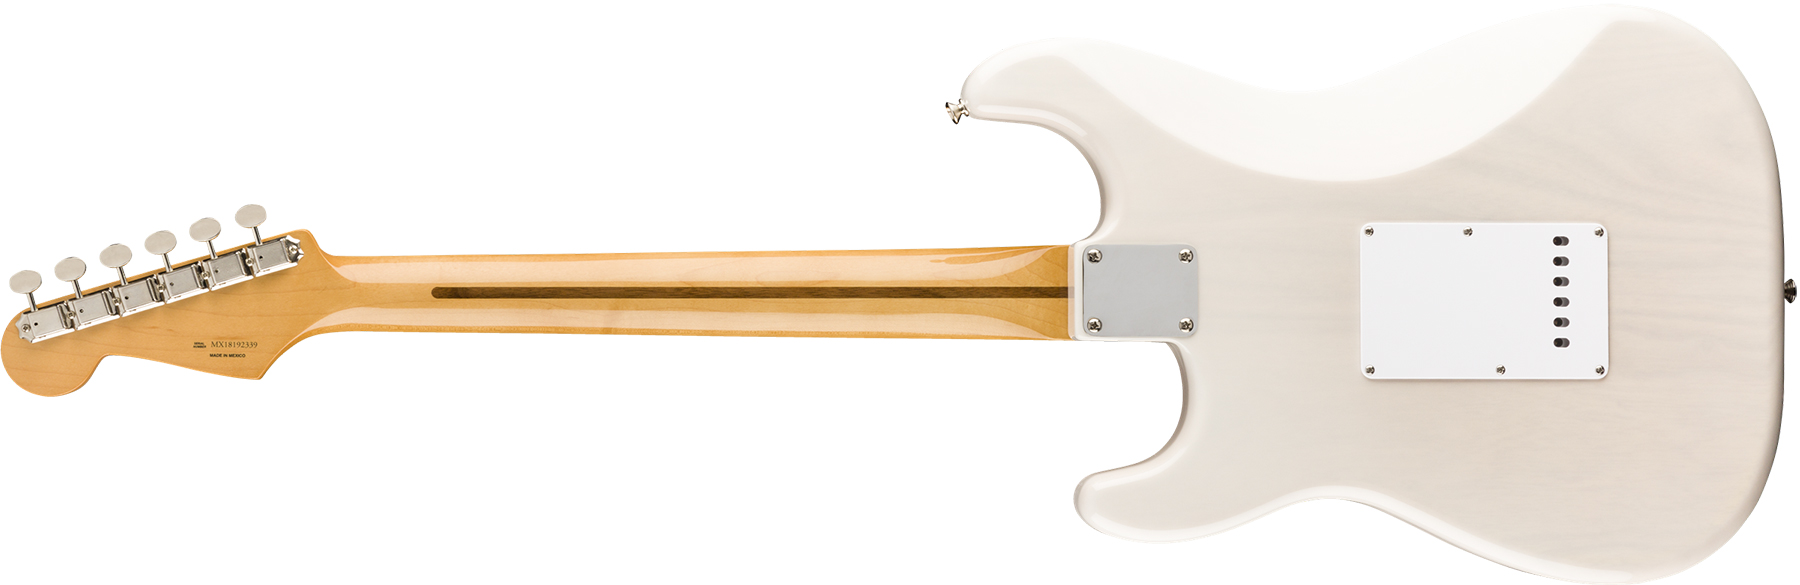 Fender Strat 50s Vintera Vintage Mex Mn - White Blonde - Str shape electric guitar - Variation 1